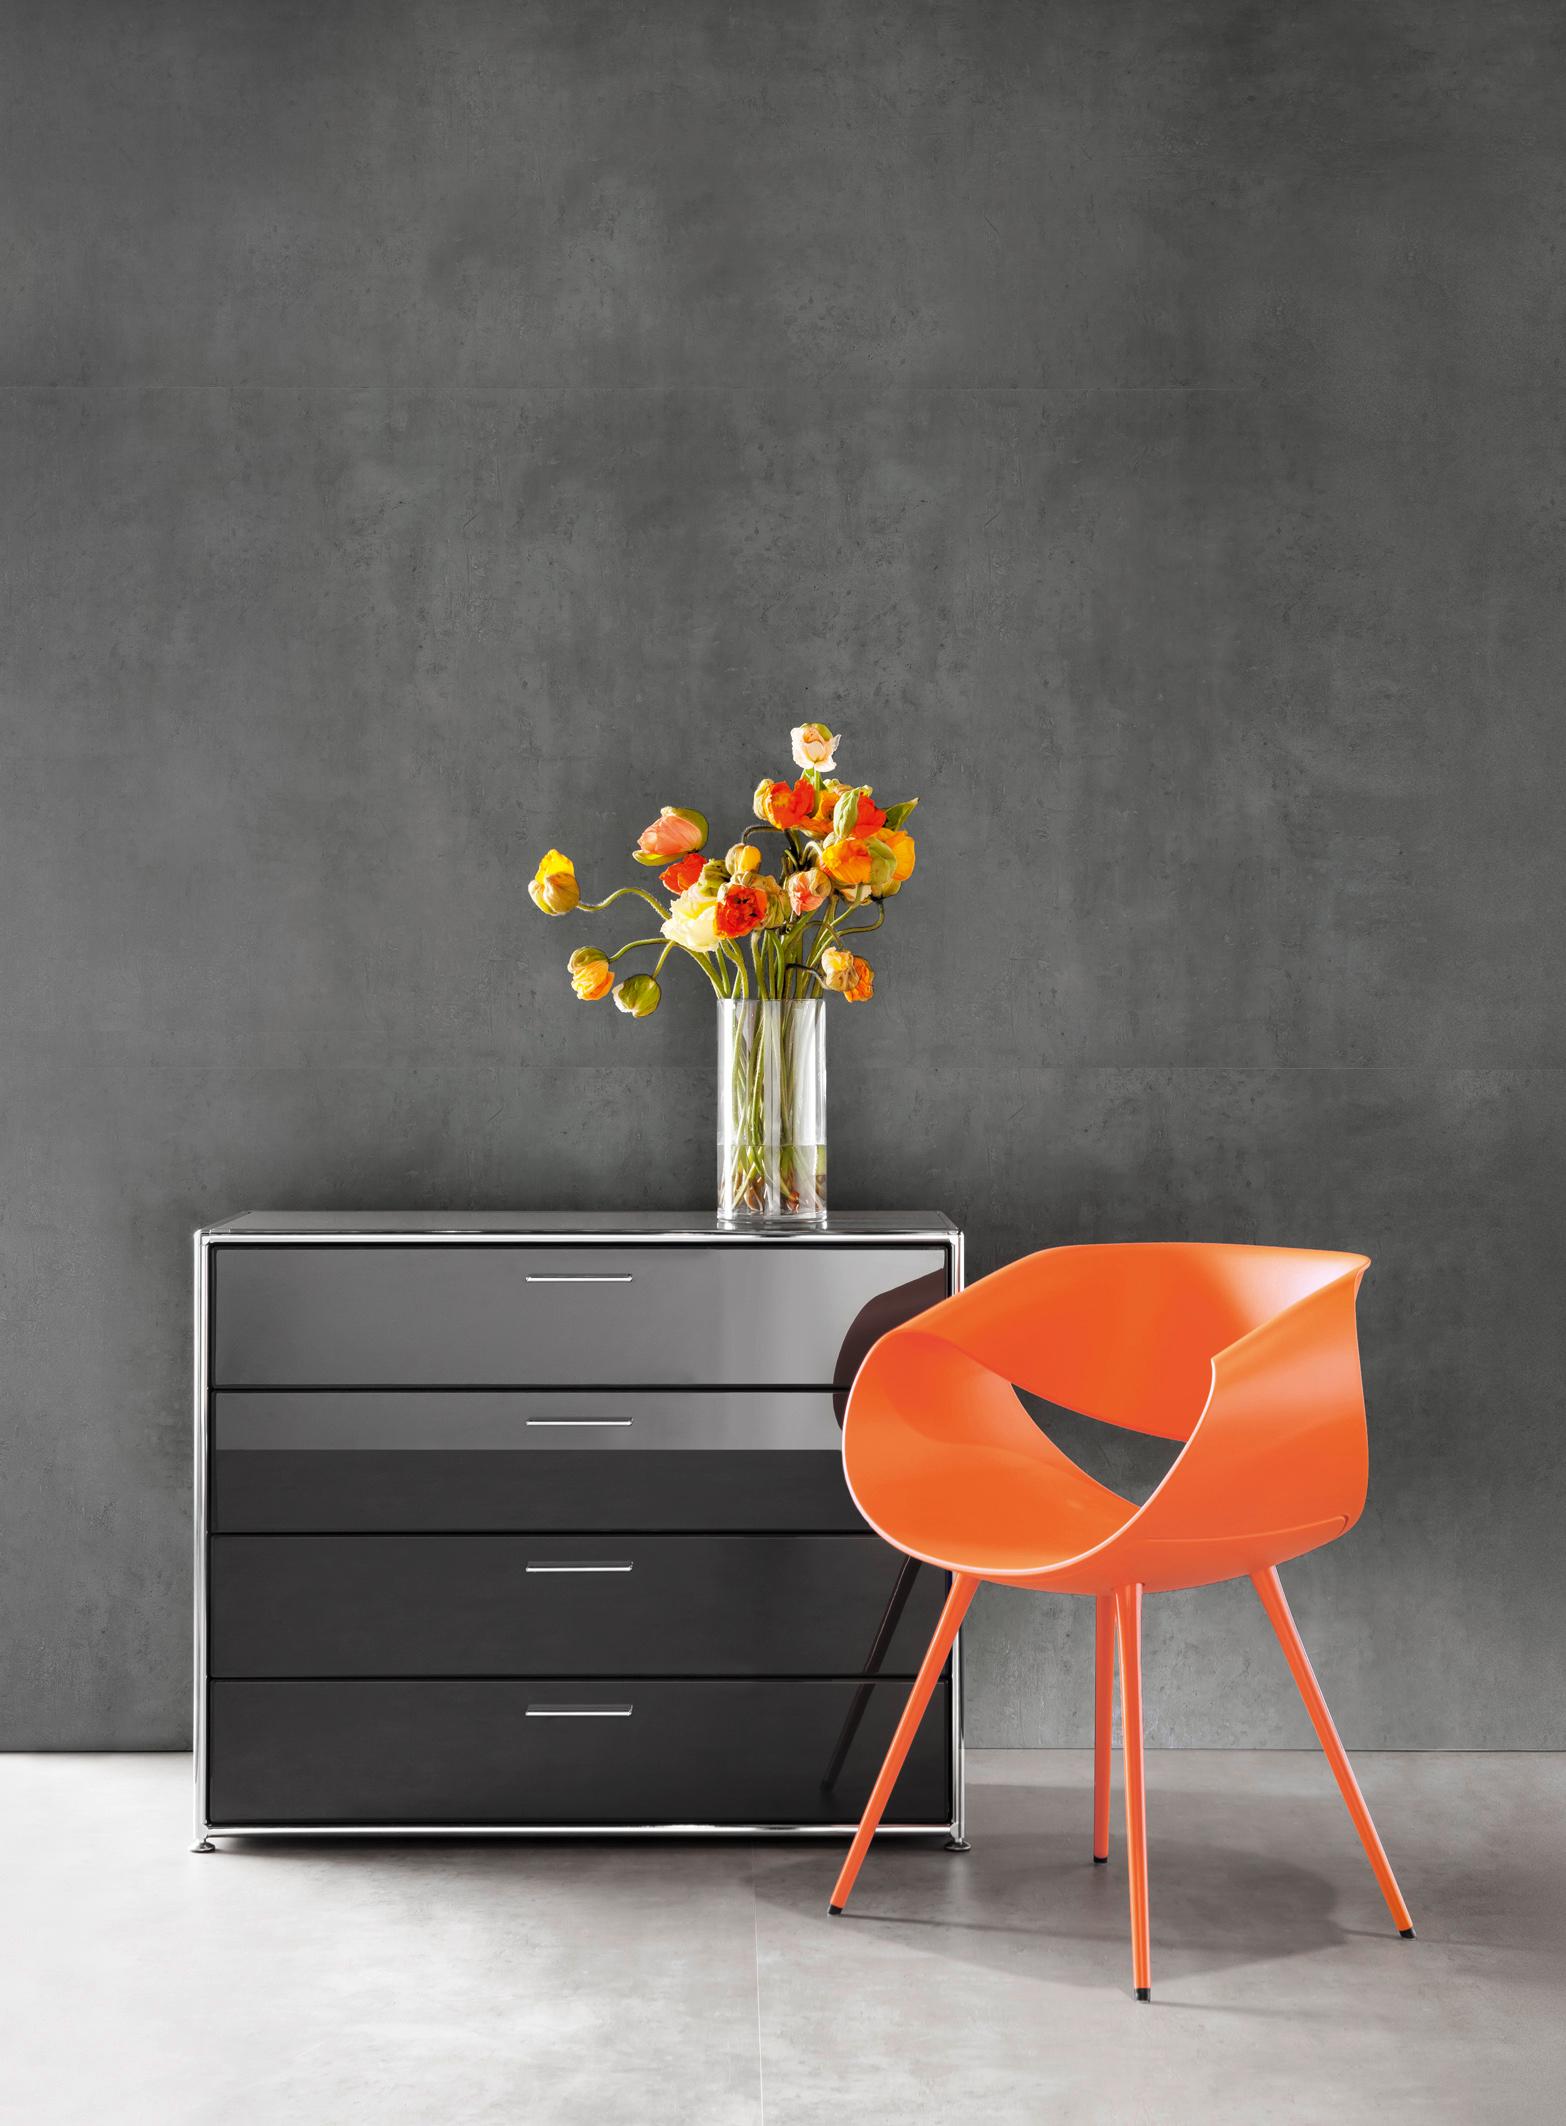 Blickfang Stuhl in orange für den Flur #sitzgelegenheit #flurmöbel ©Dauphin Home, Designer: Martin Ballendat